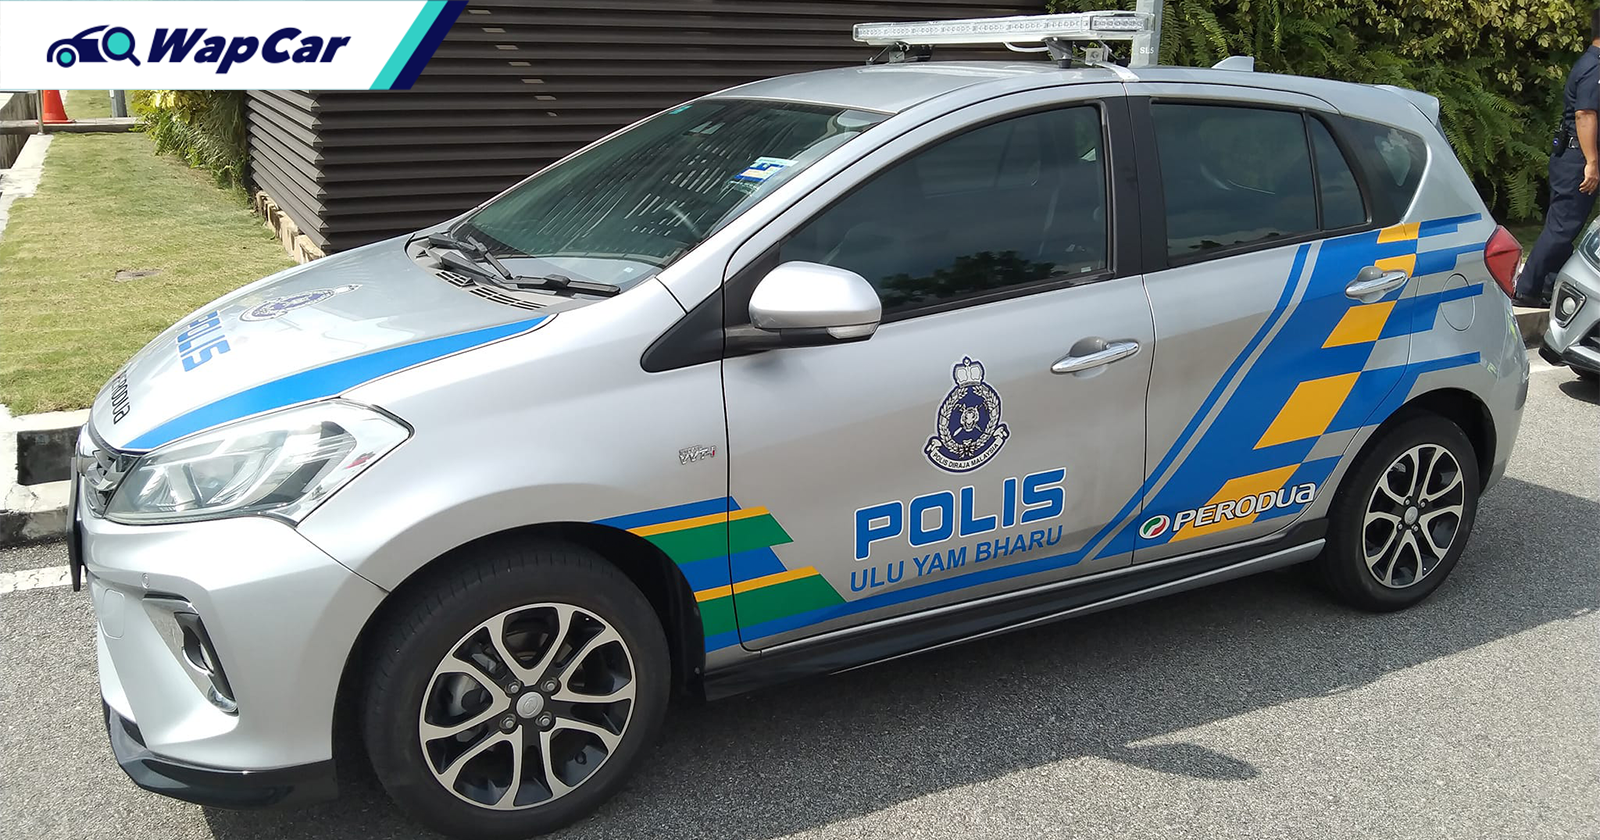 Jaga-jaga samseng jalanan, "King" Perodua Myvi dilihat jadi kenderaan peronda Polis!